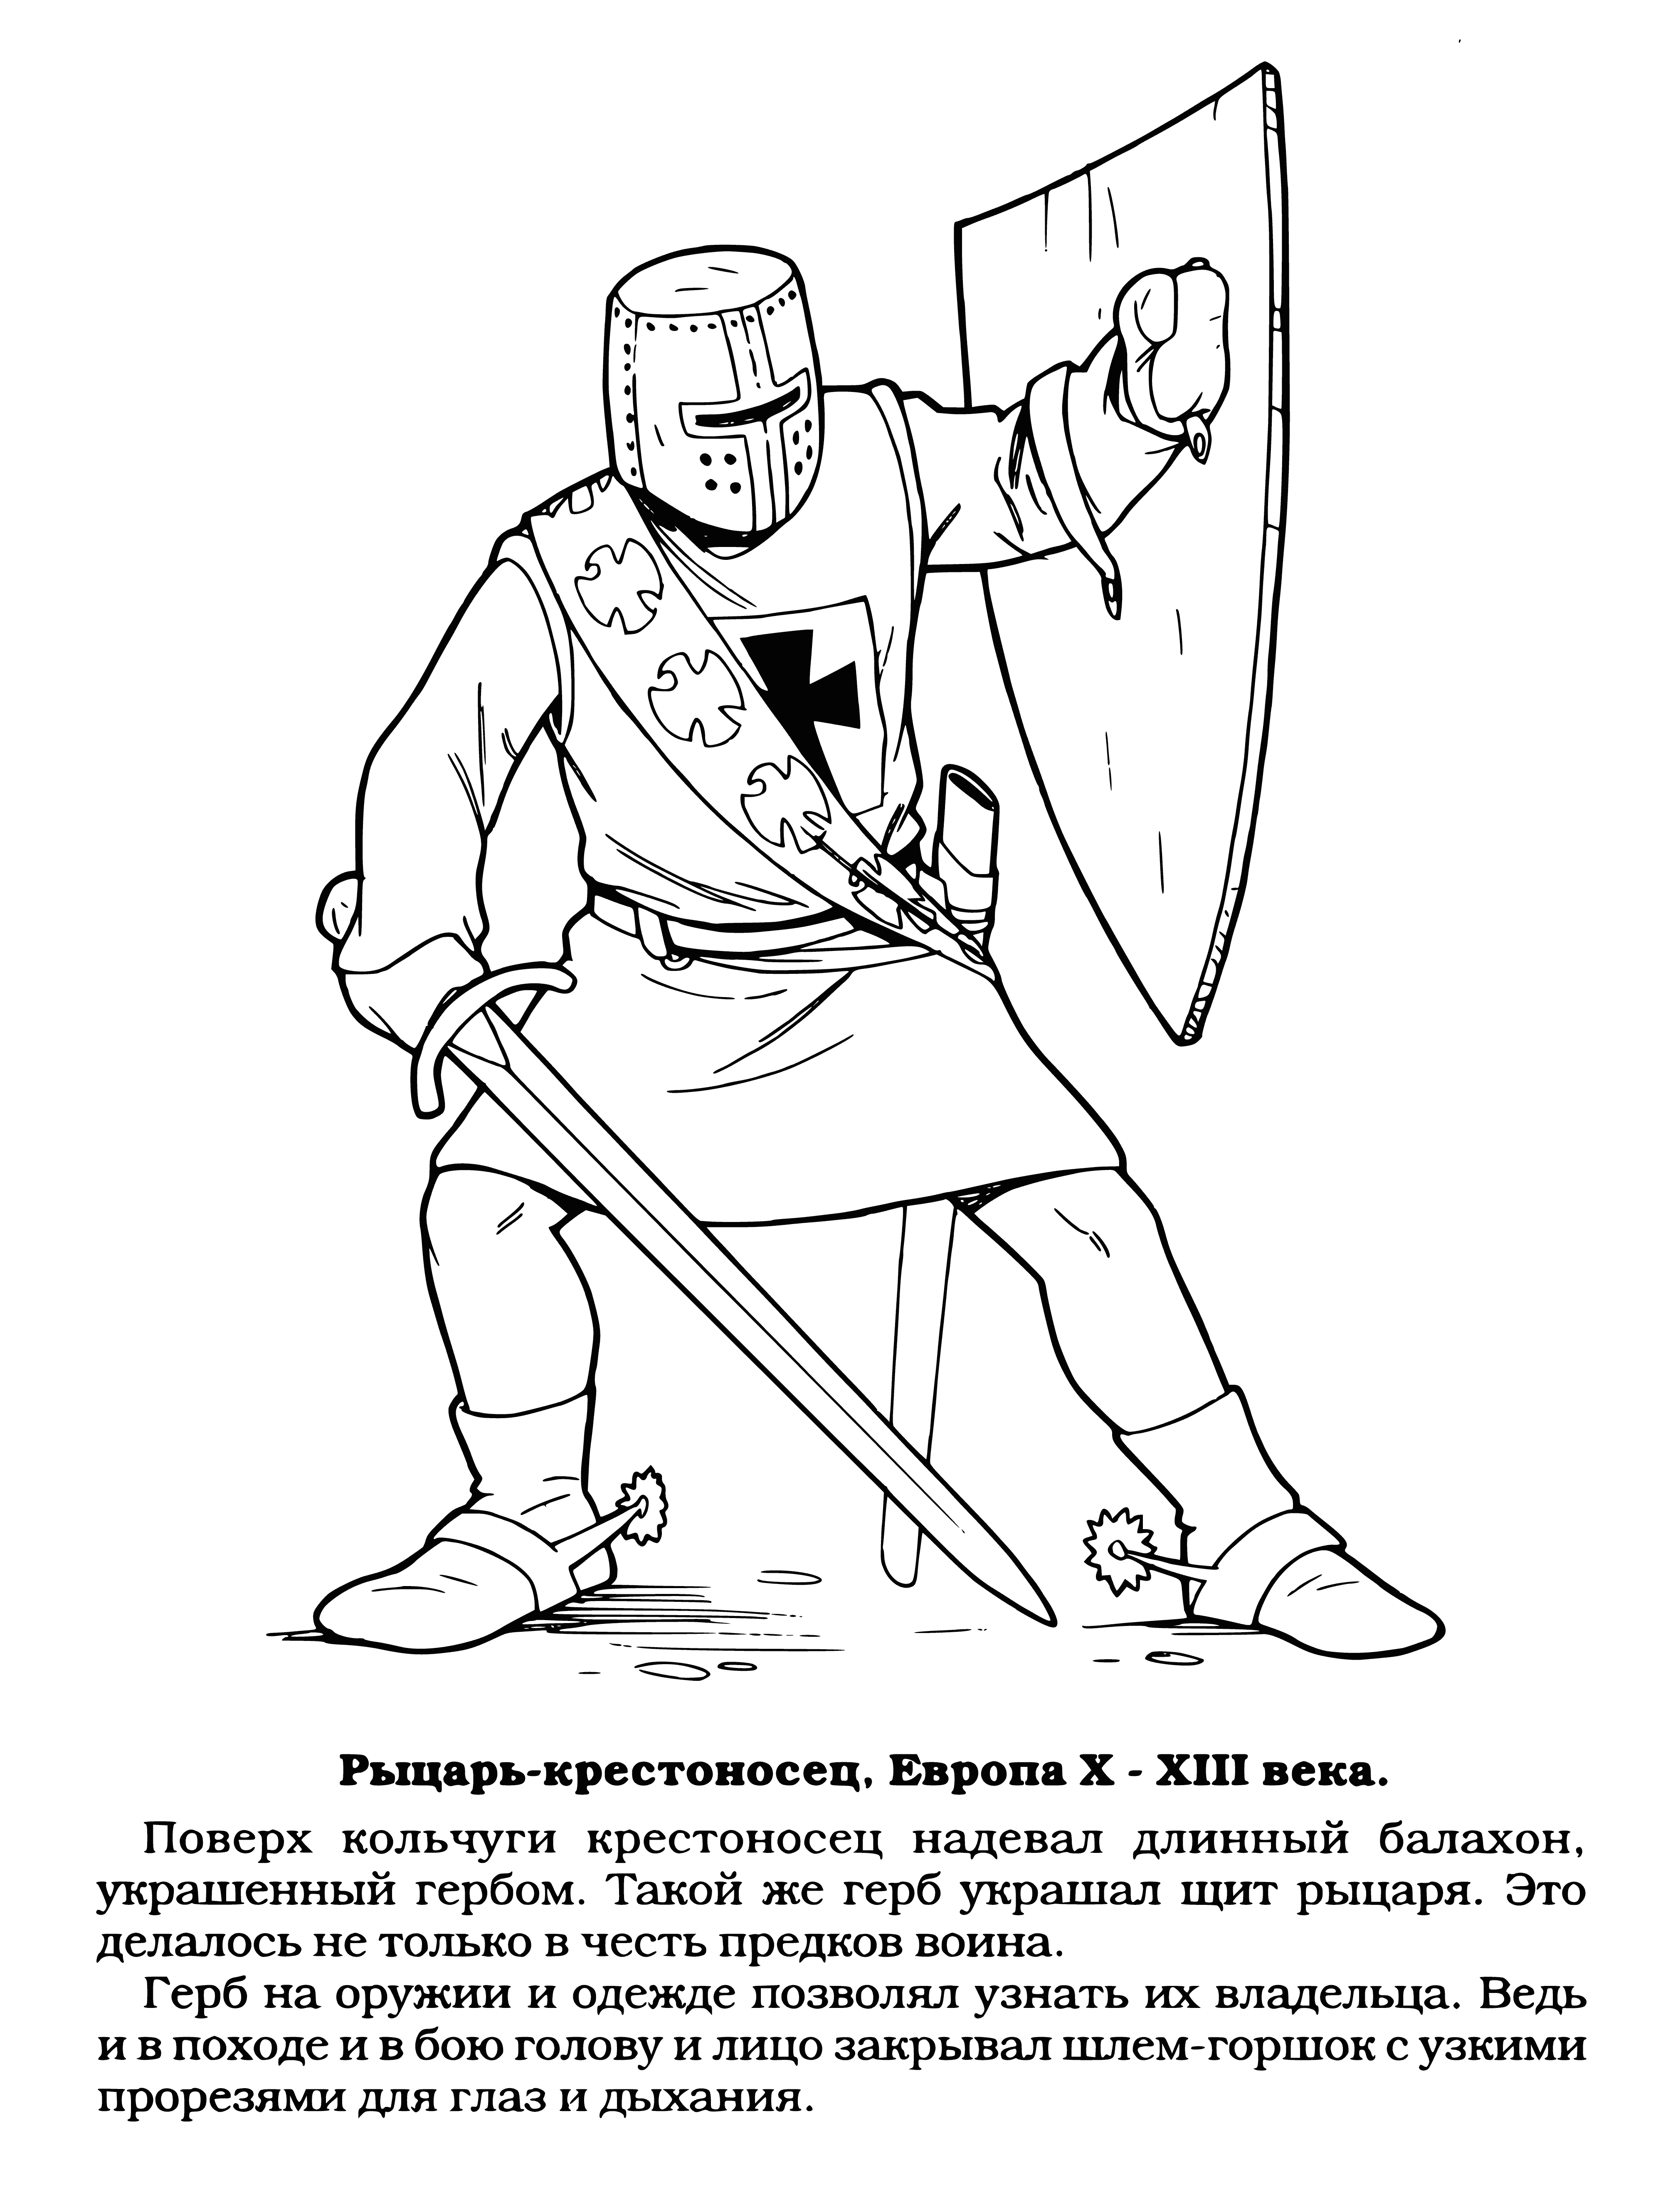 Knight Crusader inkleurbladsy